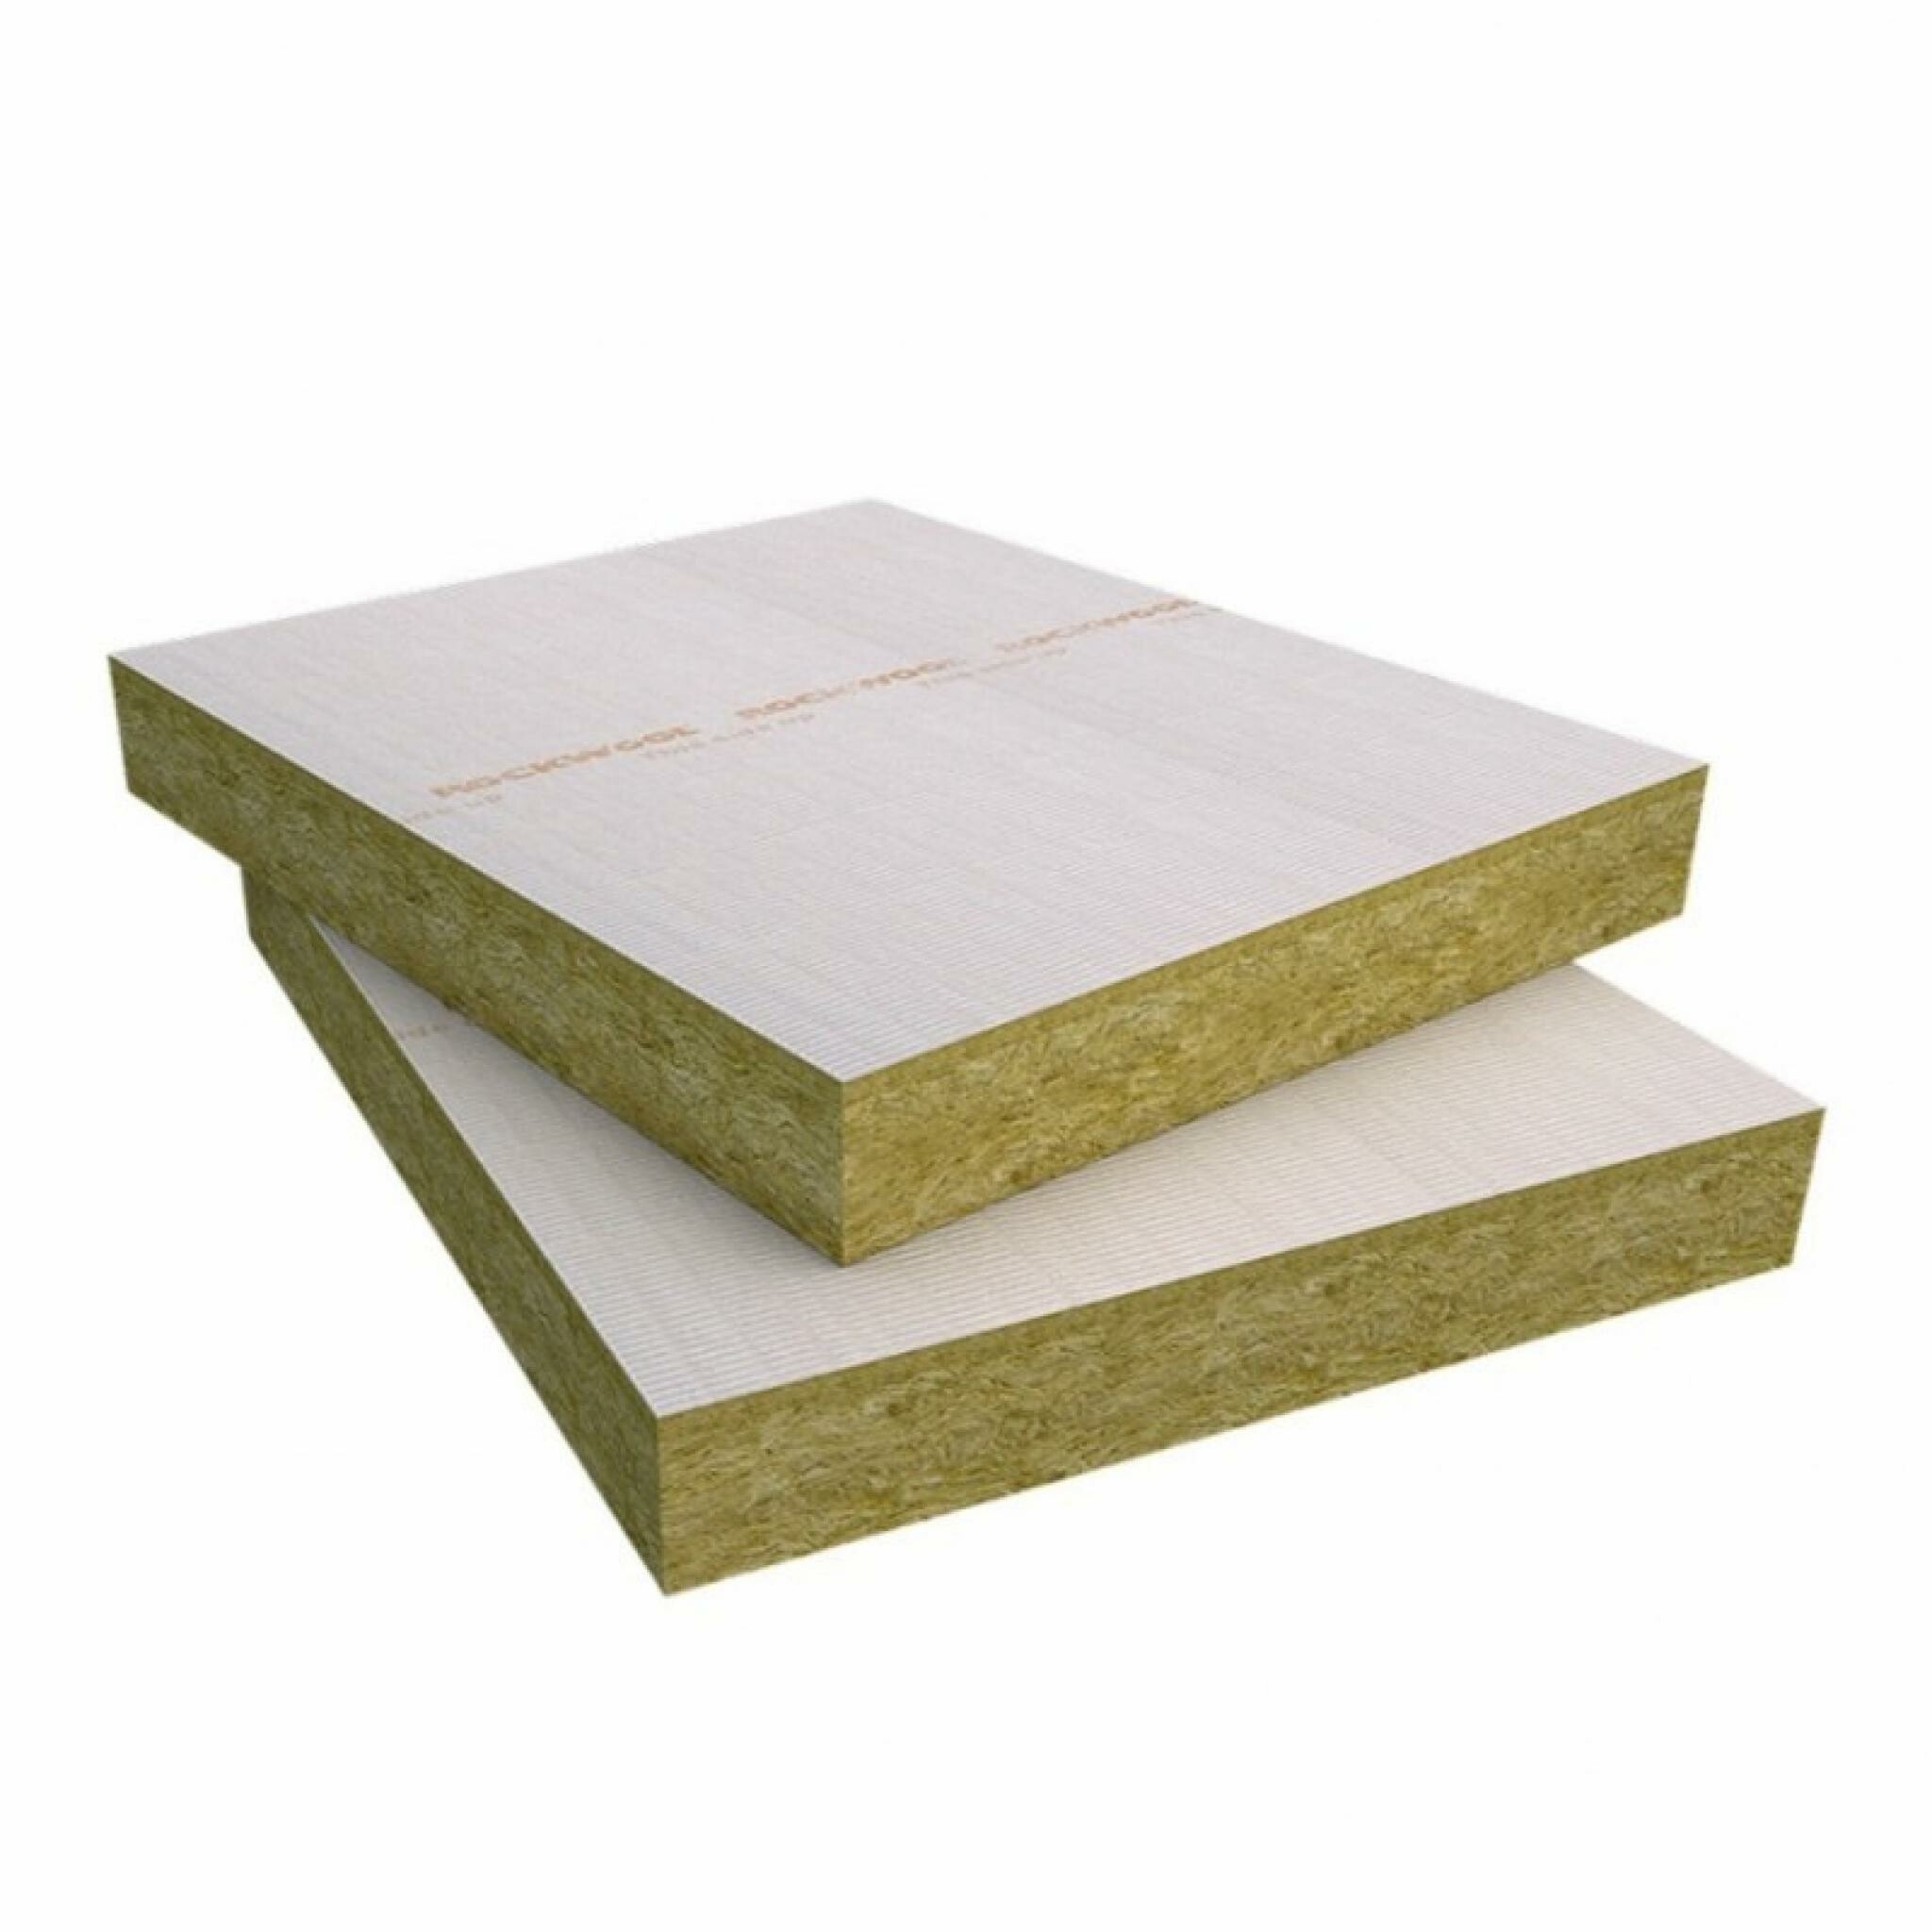 Flat Roof Insulation Boards.jpg